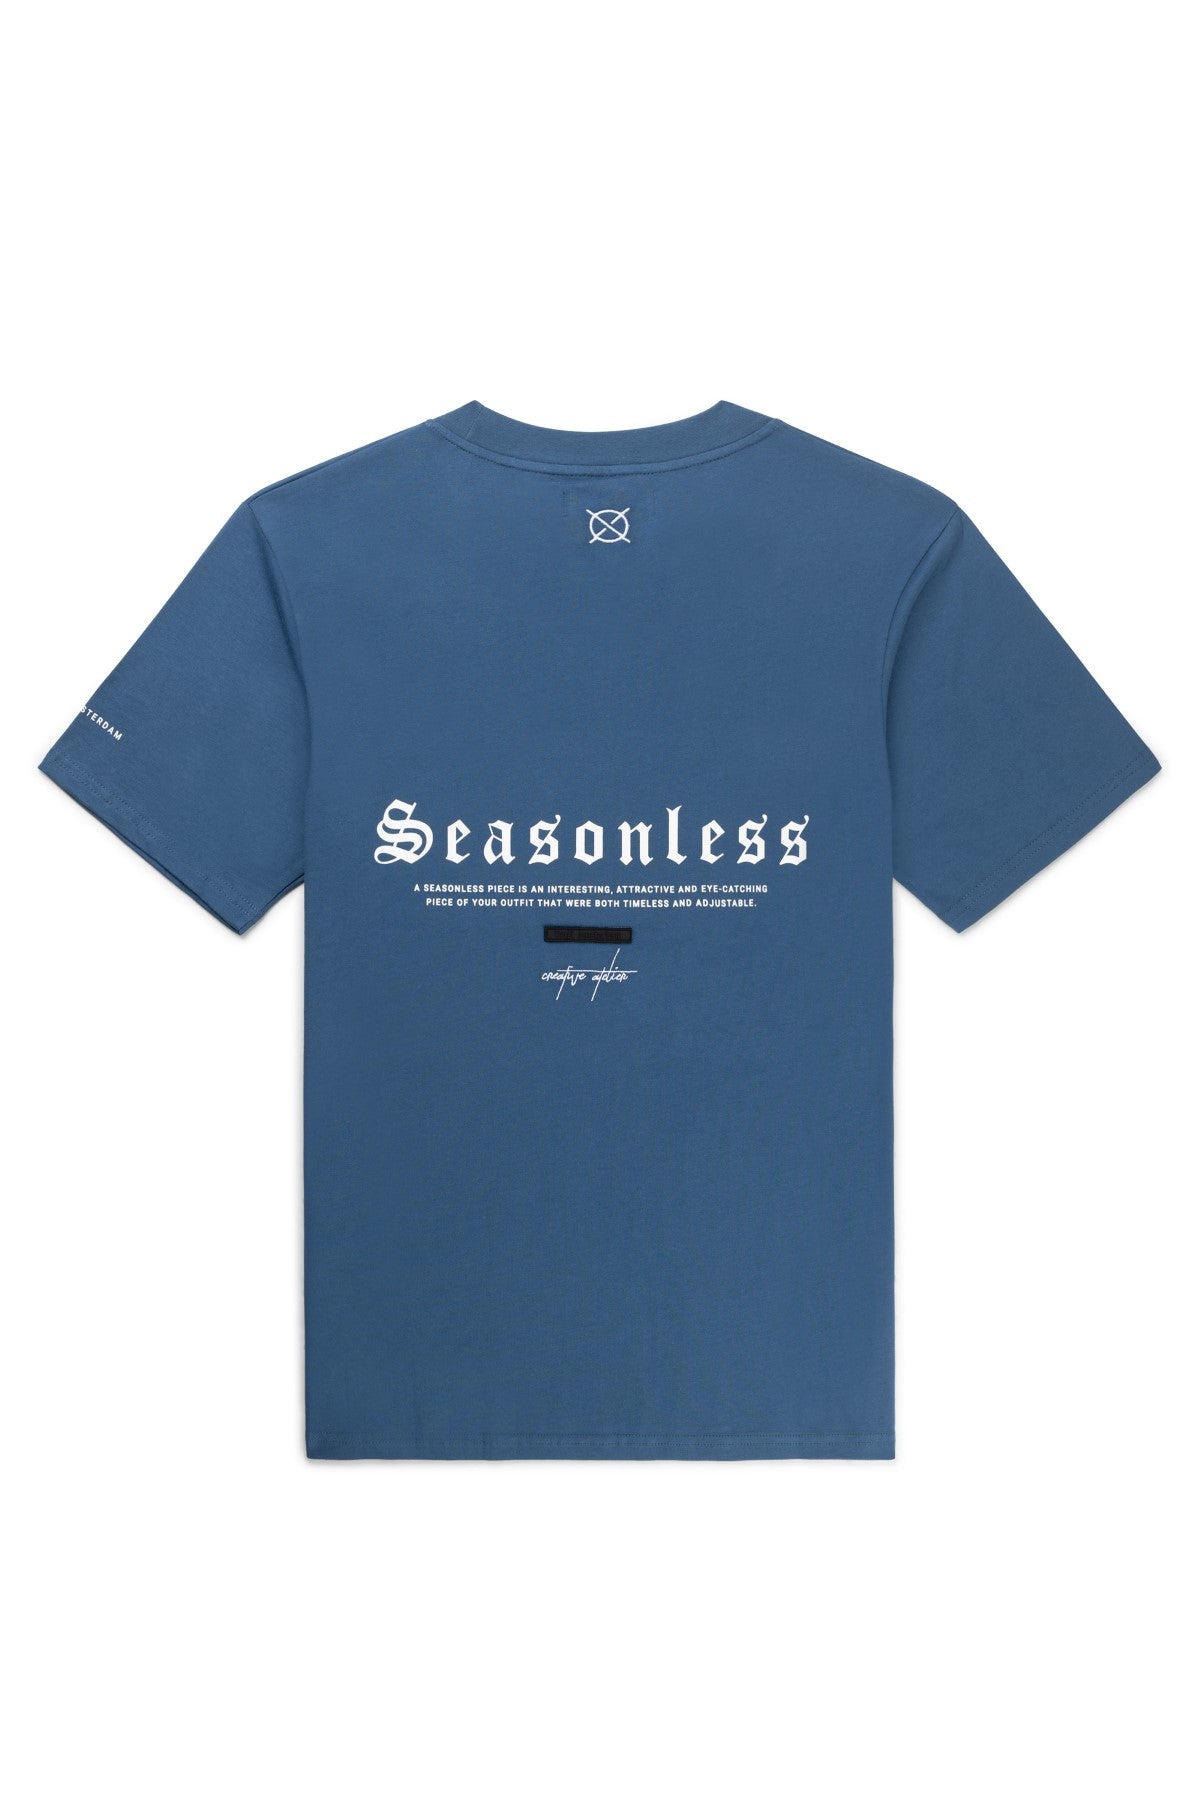 Seasonless T-Shirt - Navy